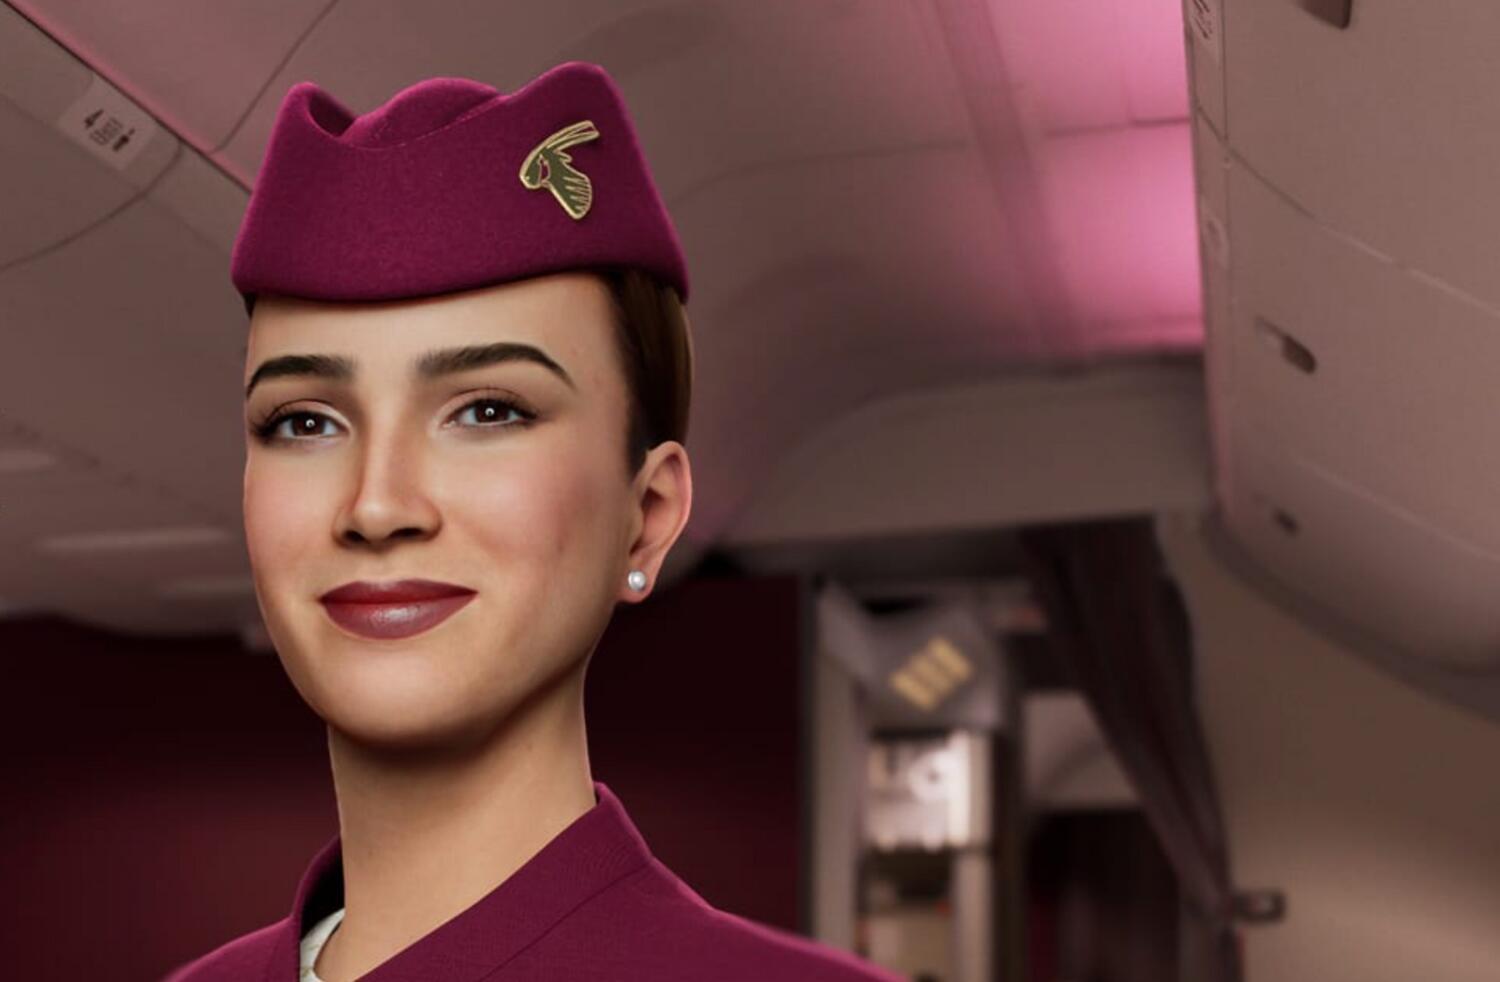 Qatar Airways introduces world's first human-like AI cabin crew